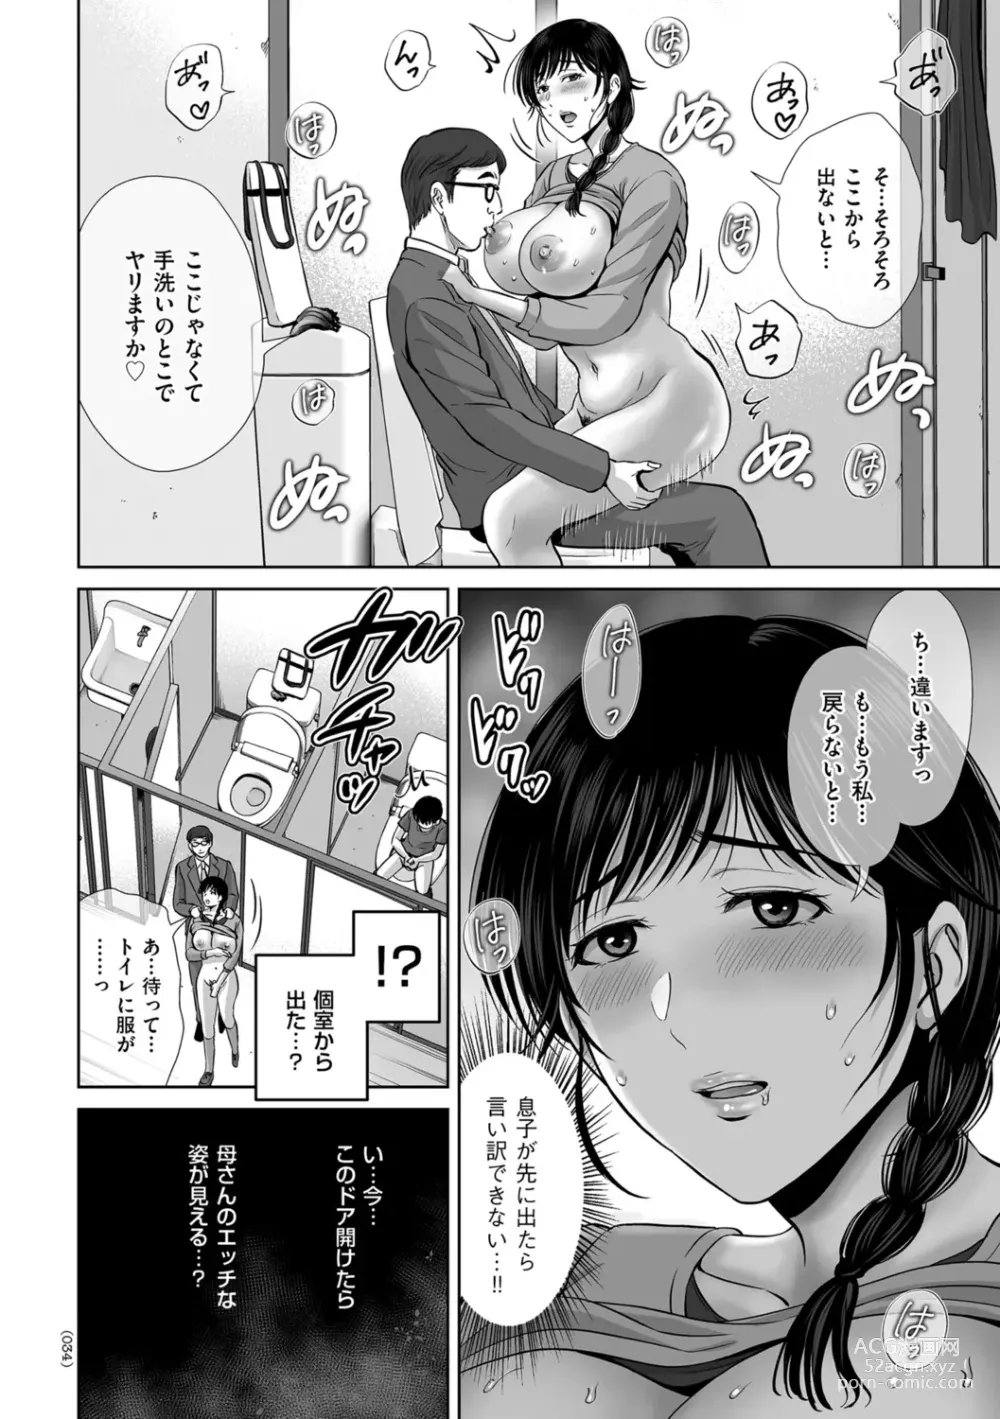 Page 34 of manga Mesuzakari no Haha-tachi e